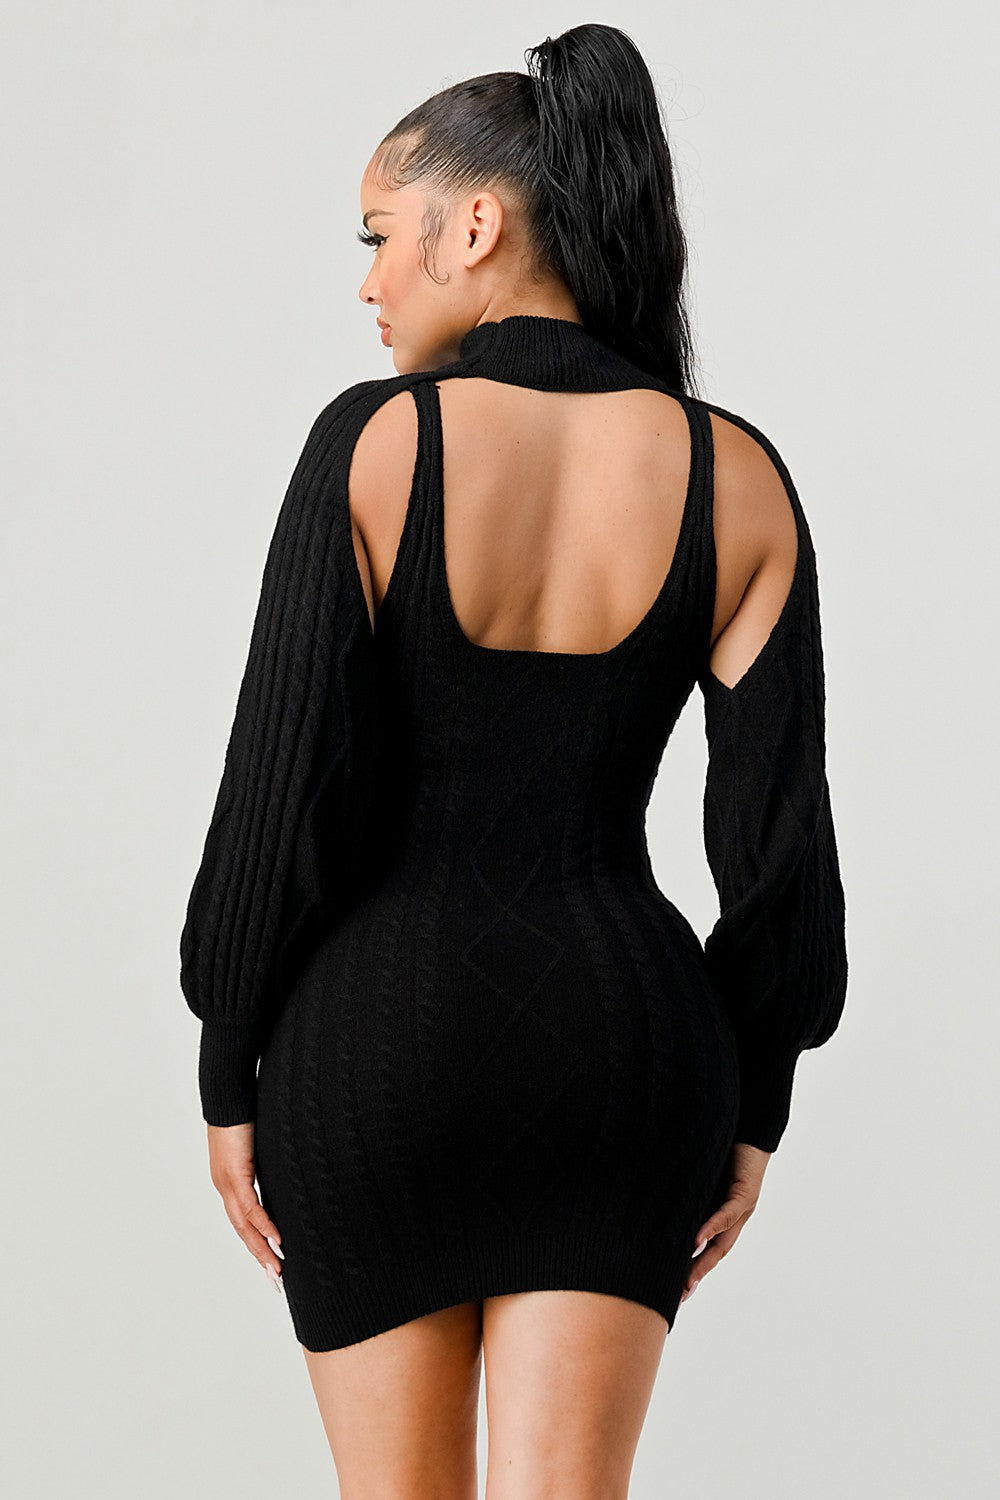 Chic & Comfy Black Knit Two Piece Dress Set